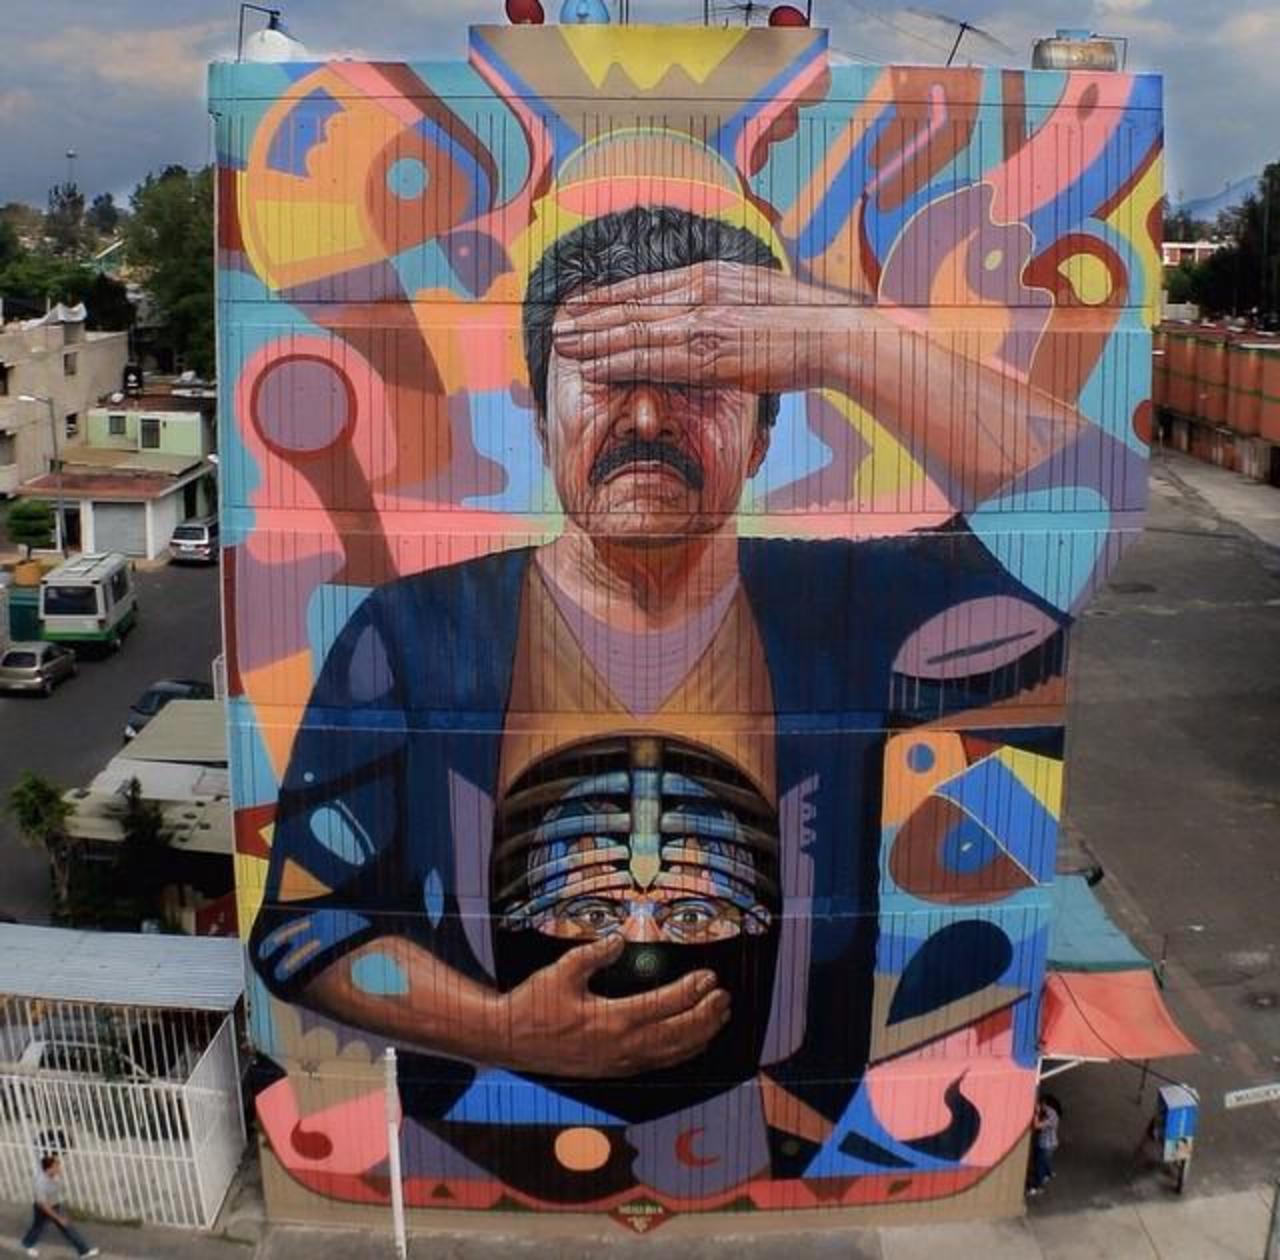 Large scale Street Art by the artist Daniel Cortez 

#art #mural #graffiti #streetart http://t.co/Tvm9OojSnF